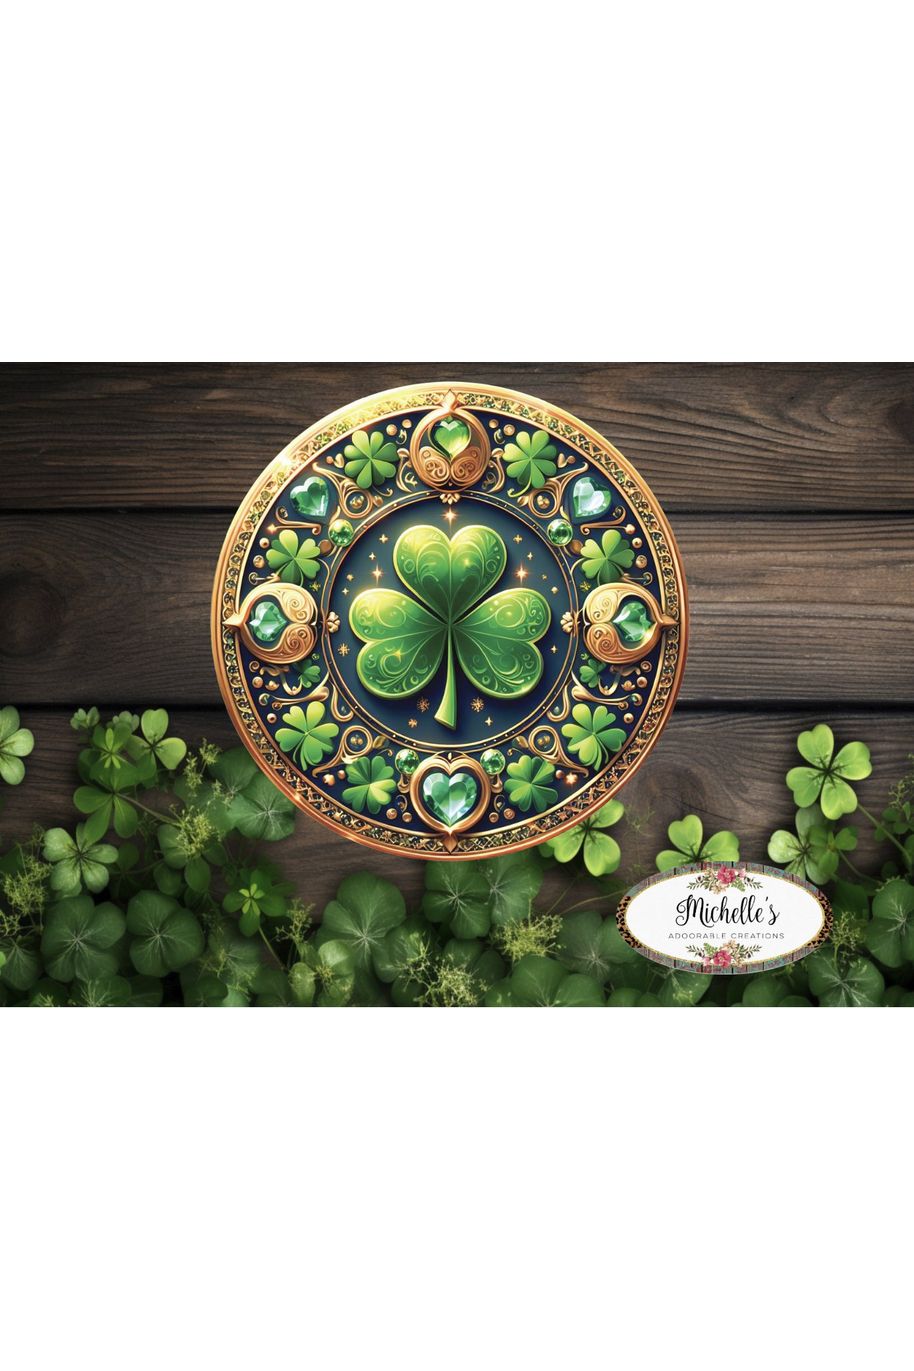 Jewel Saint Patrick Clover Sign - Wreath Enhancement - Michelle's aDOORable Creations - Signature Signs